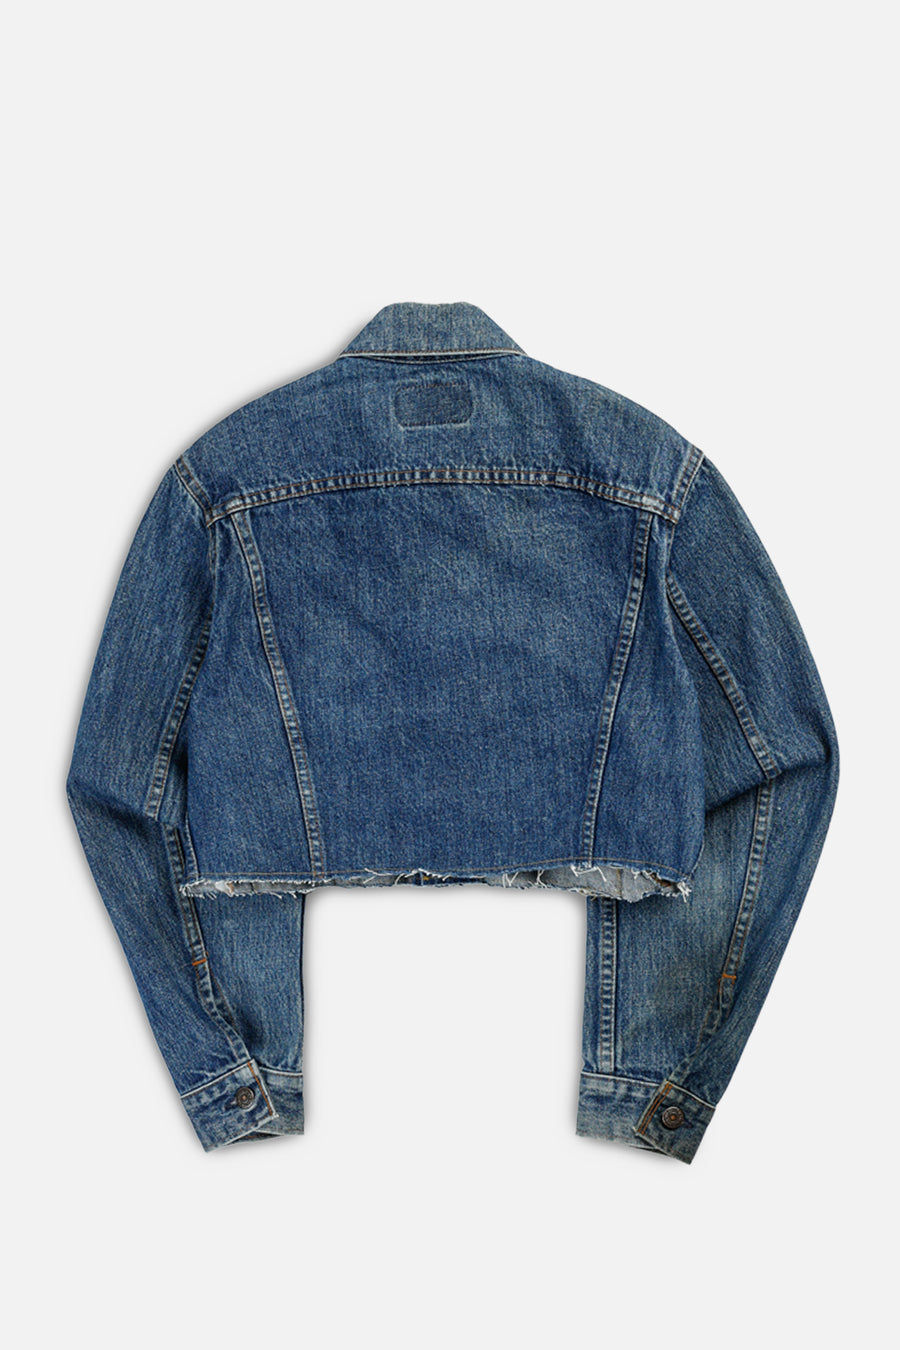 Rework Vintage Levi's USA Crop Denim Jacket - S